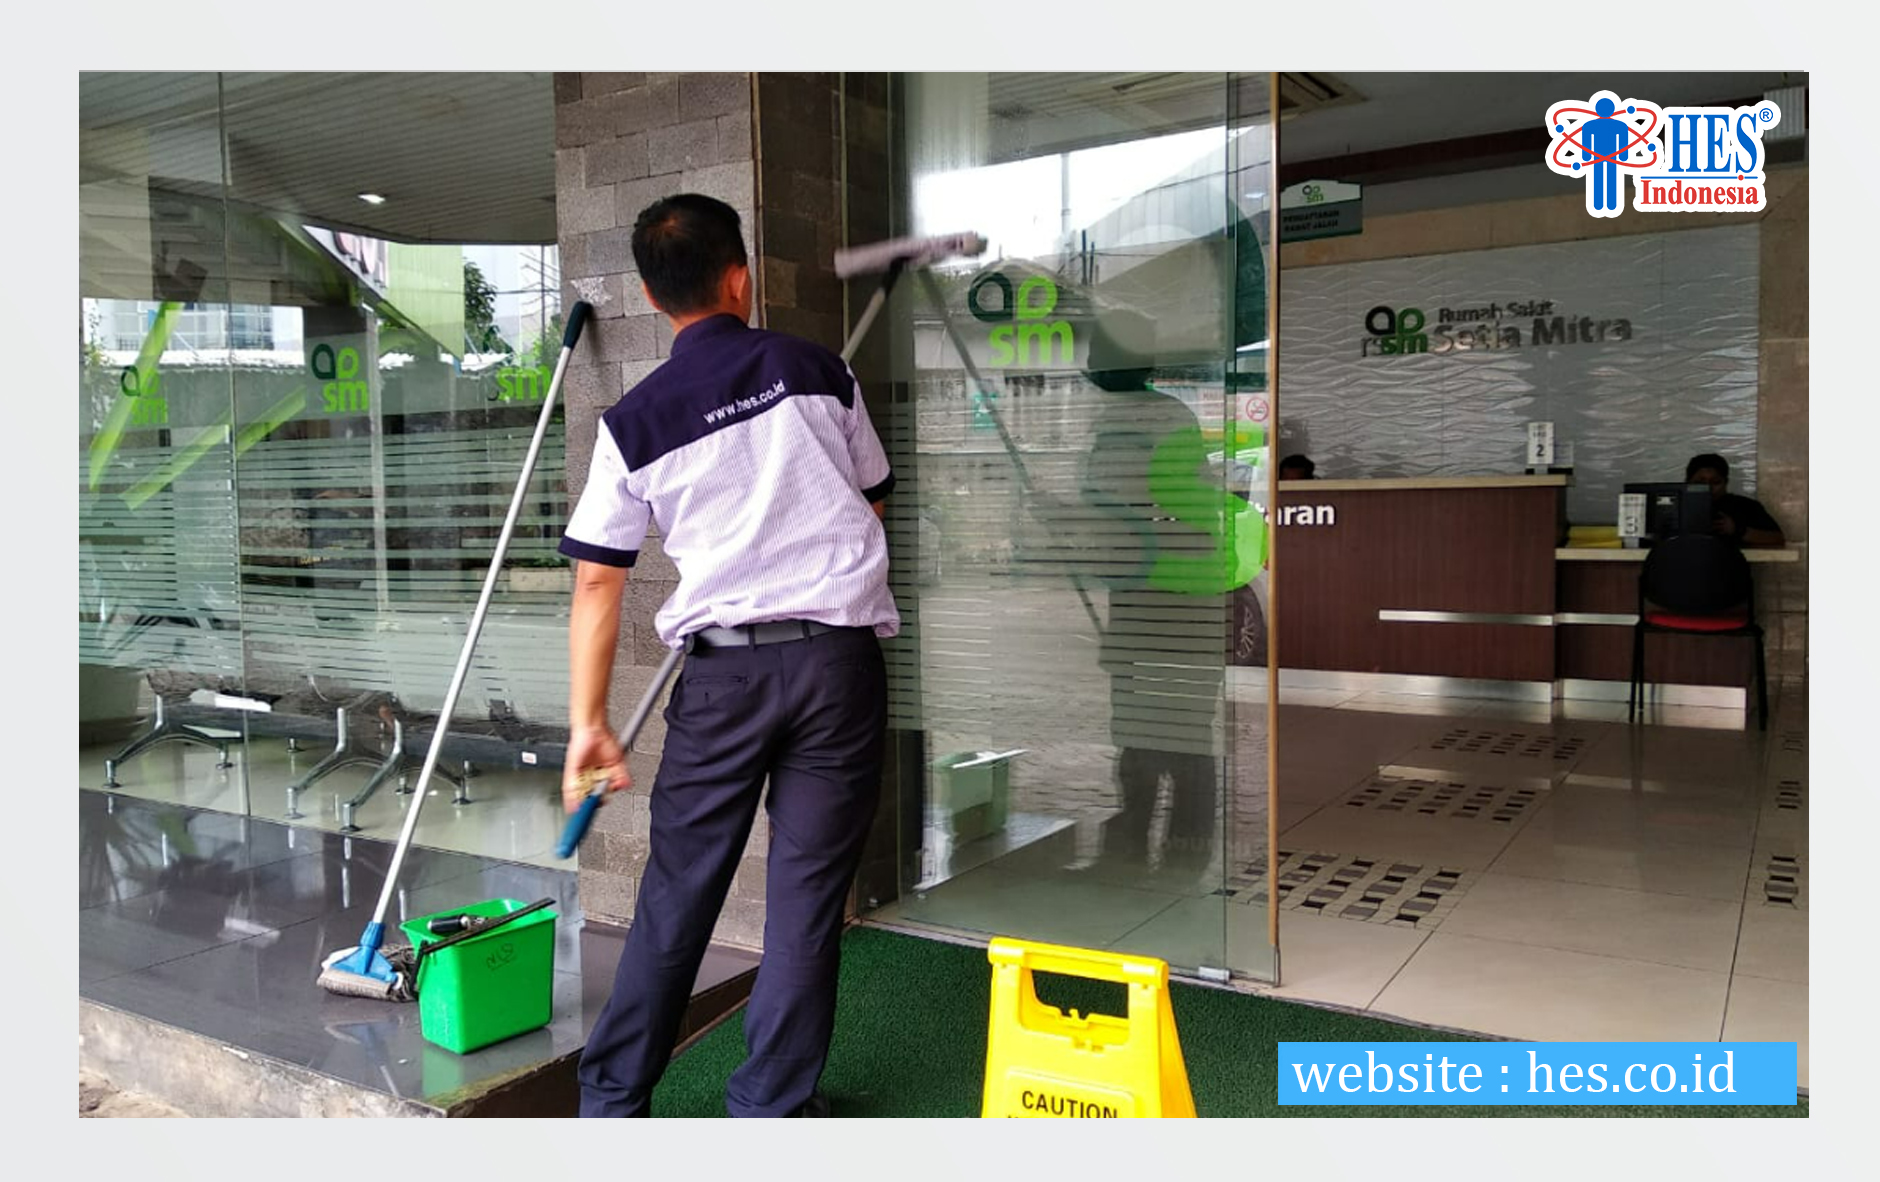 Jasa cleaning service berkualitas tinggi  - Jasa cleaning service berkualitas tinggi HES INDONESIA